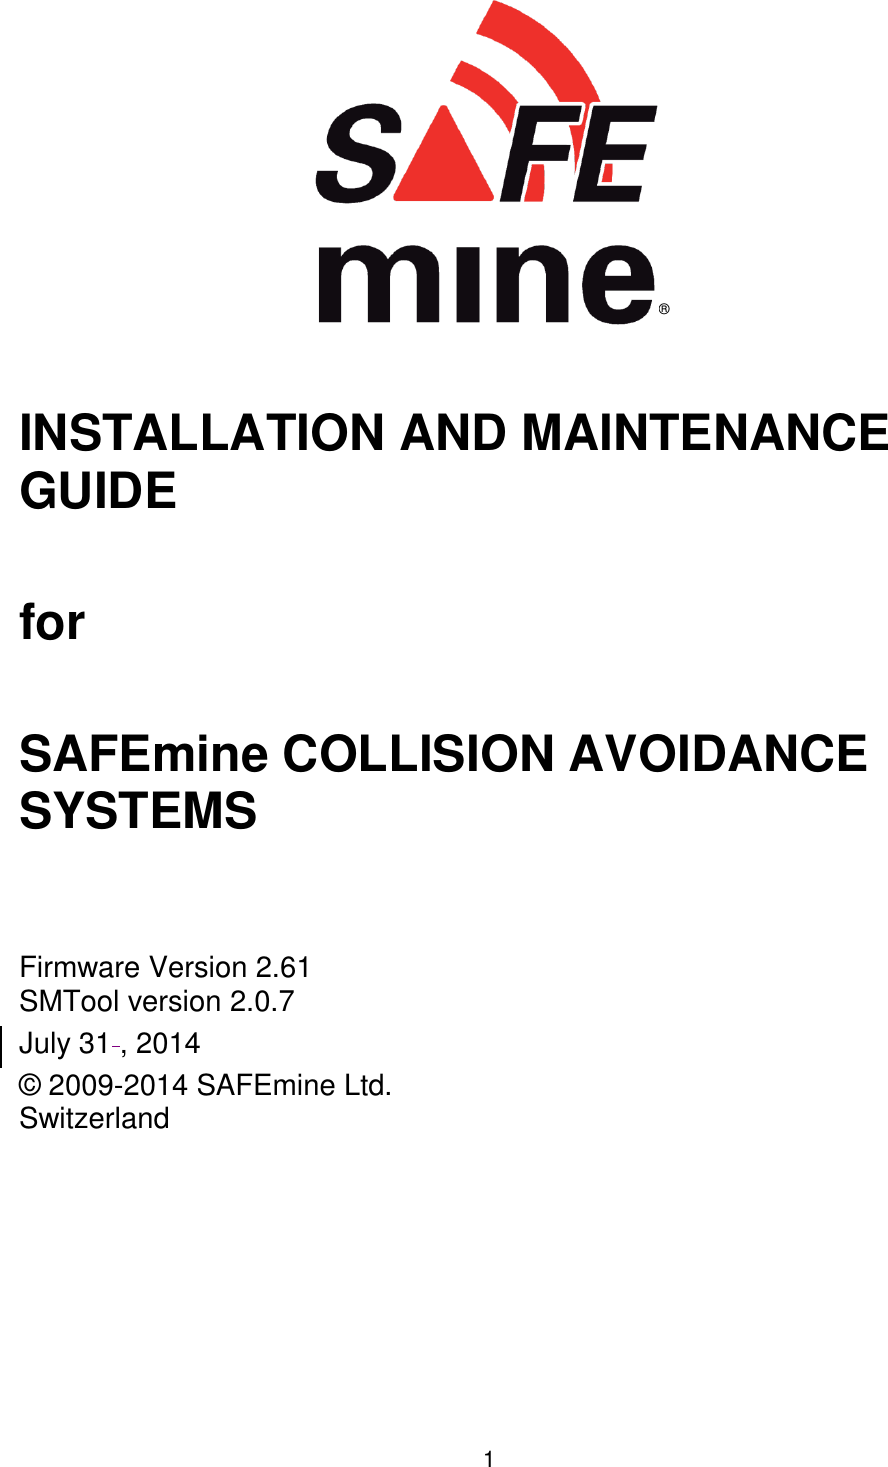 1   ®  INSTALLATION AND MAINTENANCE GUIDE  for  SAFEmine COLLISION AVOIDANCE SYSTEMS   Firmware Version 2.61 SMTool version 2.0.7 July 31 , 2014 © 2009-2014 SAFEmine Ltd. Switzerland    